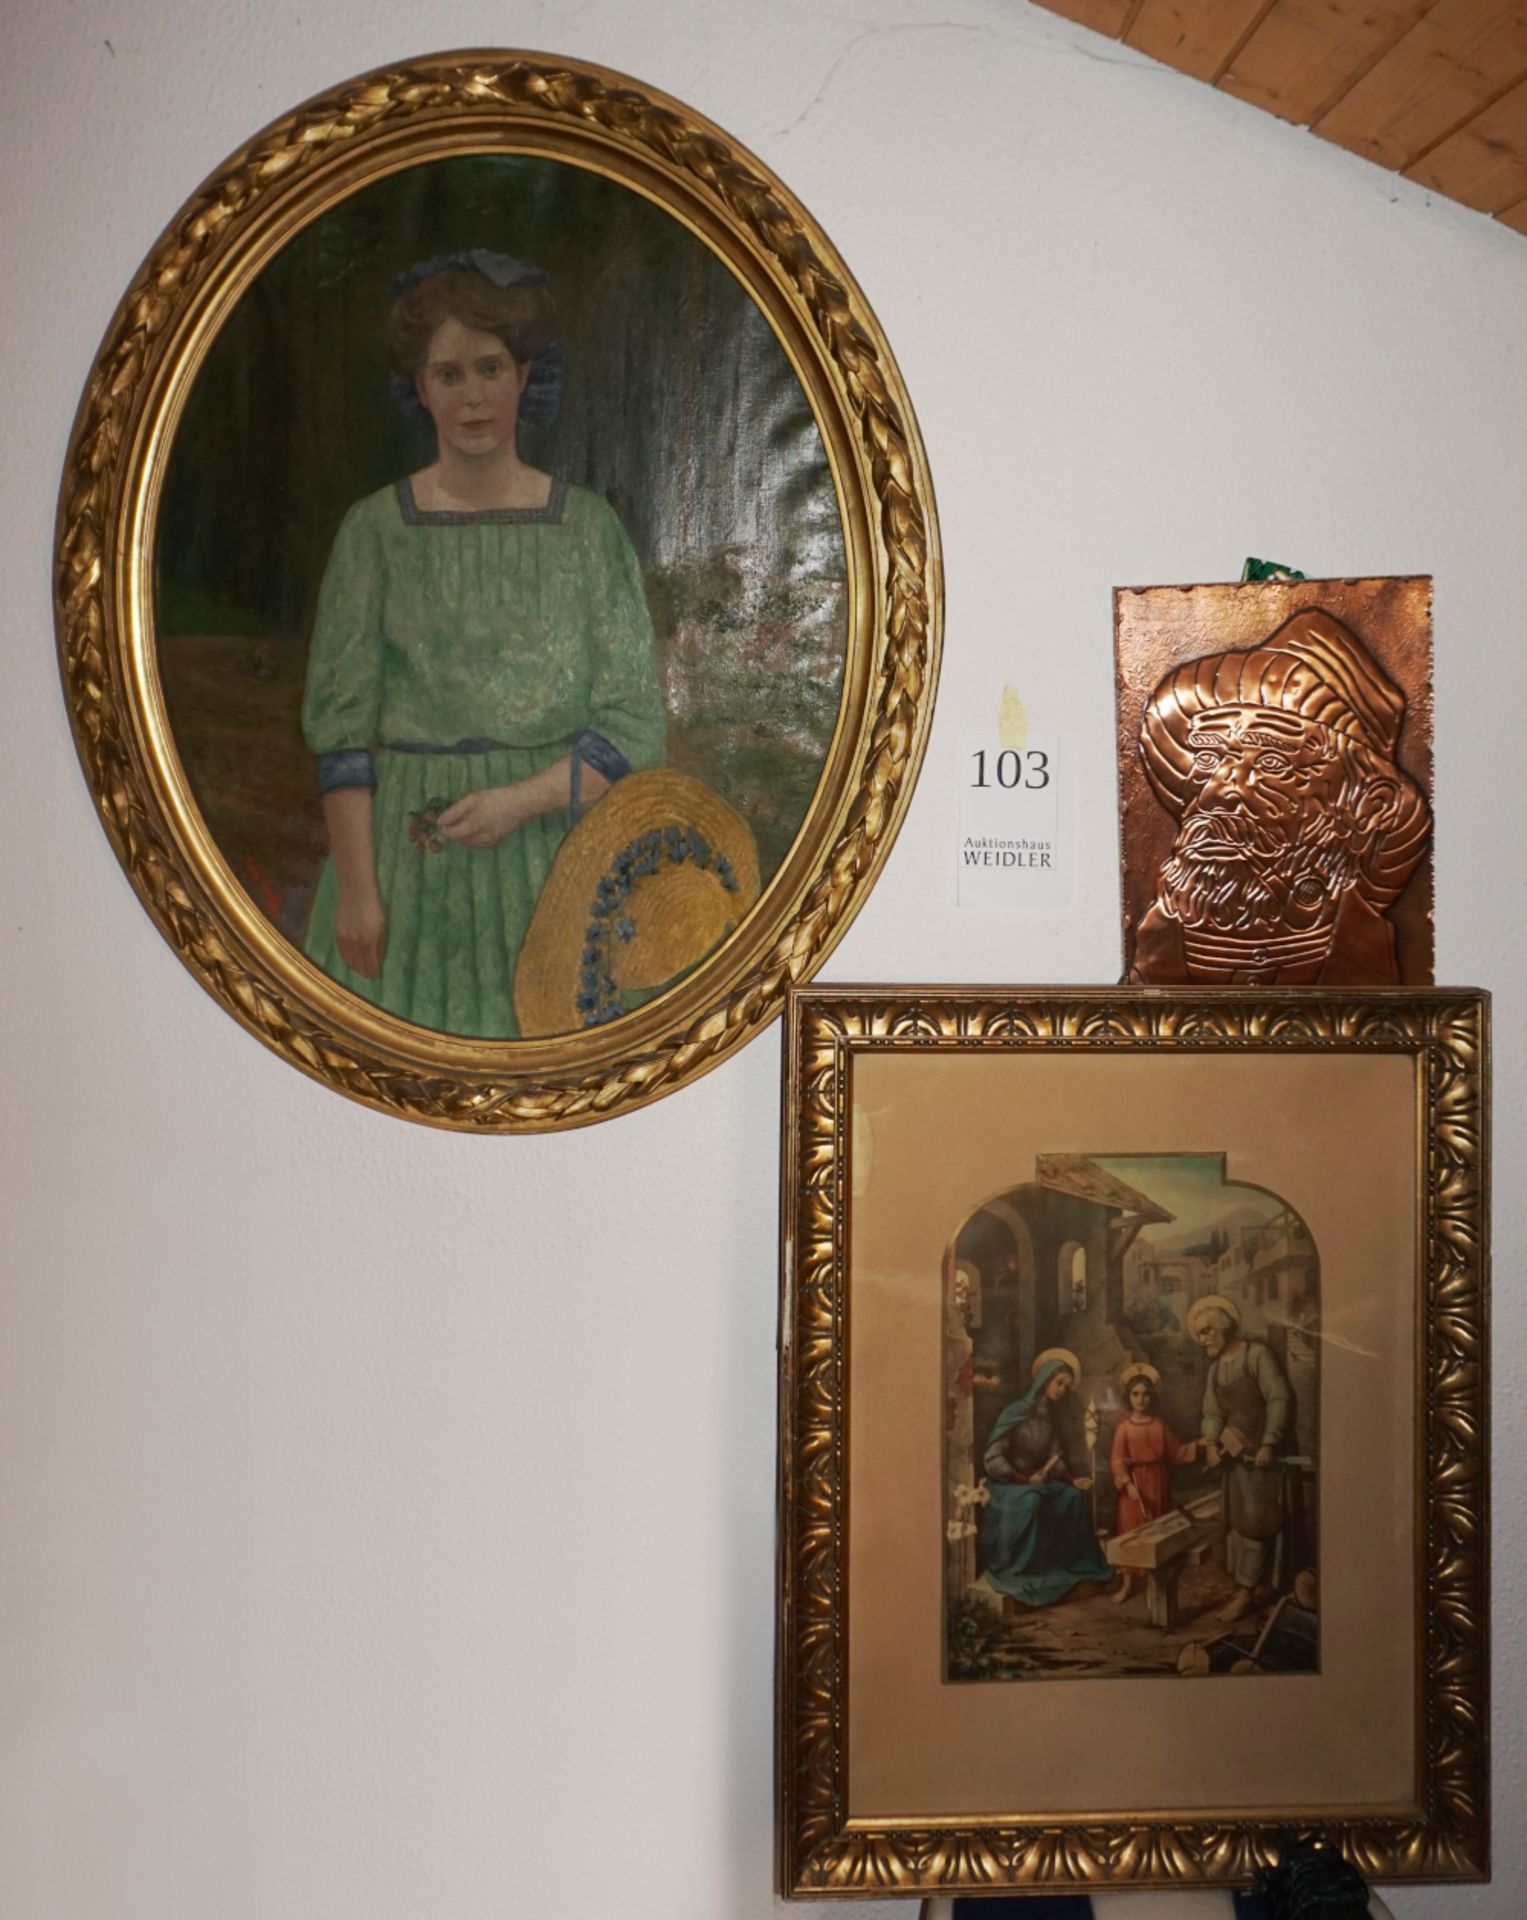 1 Ölgemälde oval l. u. sign. ERICH CASPARI 1912 "Damenportrait", 79x62 cm, Stuckrahmen,